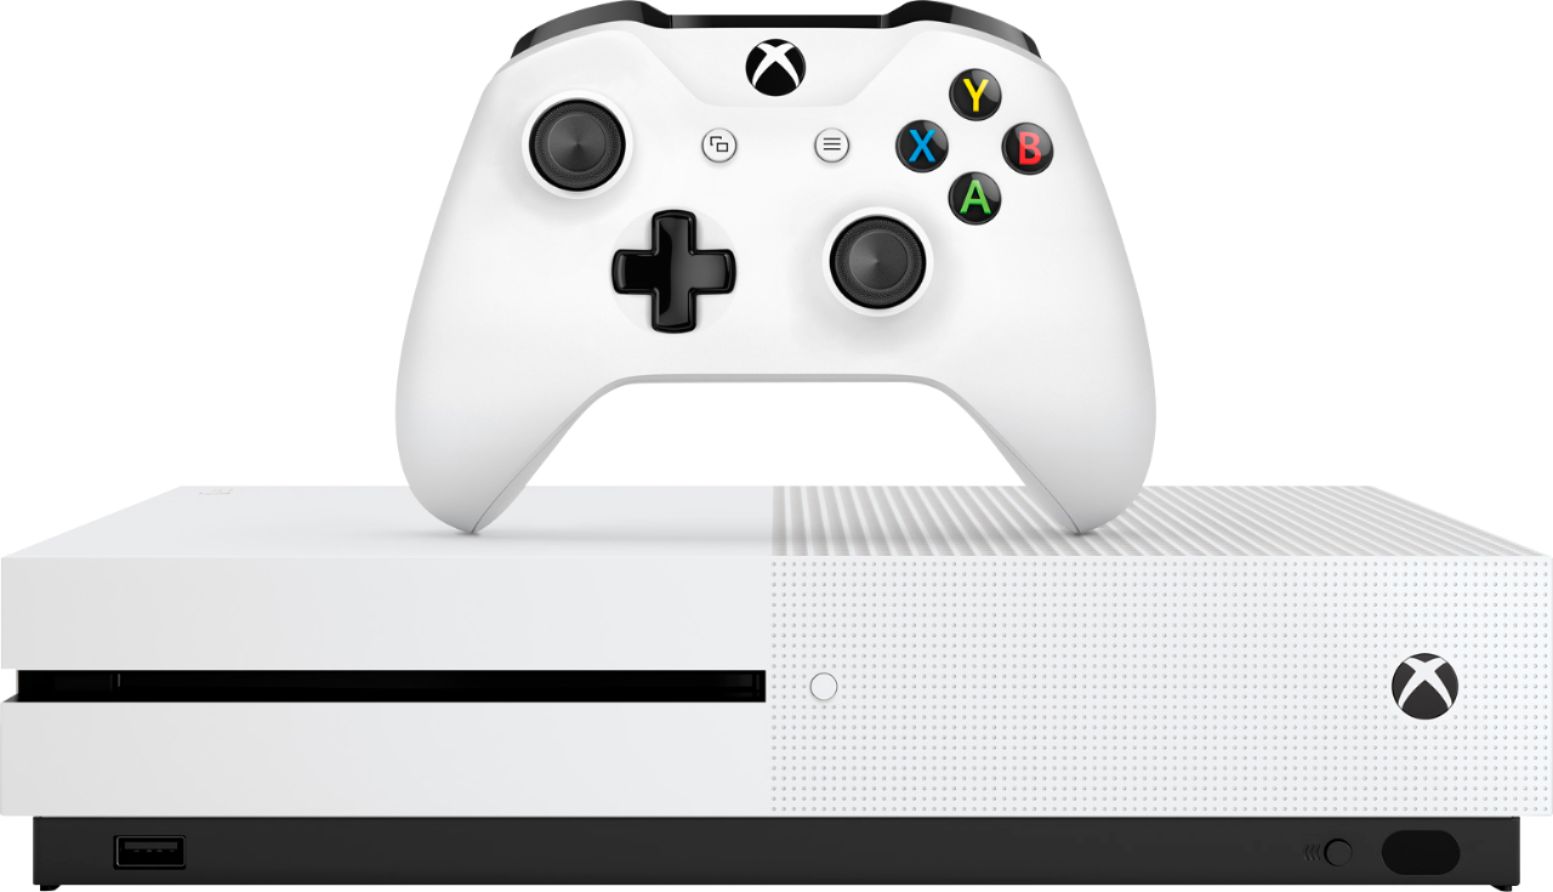 Trillen Richtlijnen Matroos Best Buy: Microsoft Xbox One S 1TB Anthem Bundle with 4K Ultra HD Blu-Ray  White 234-00938